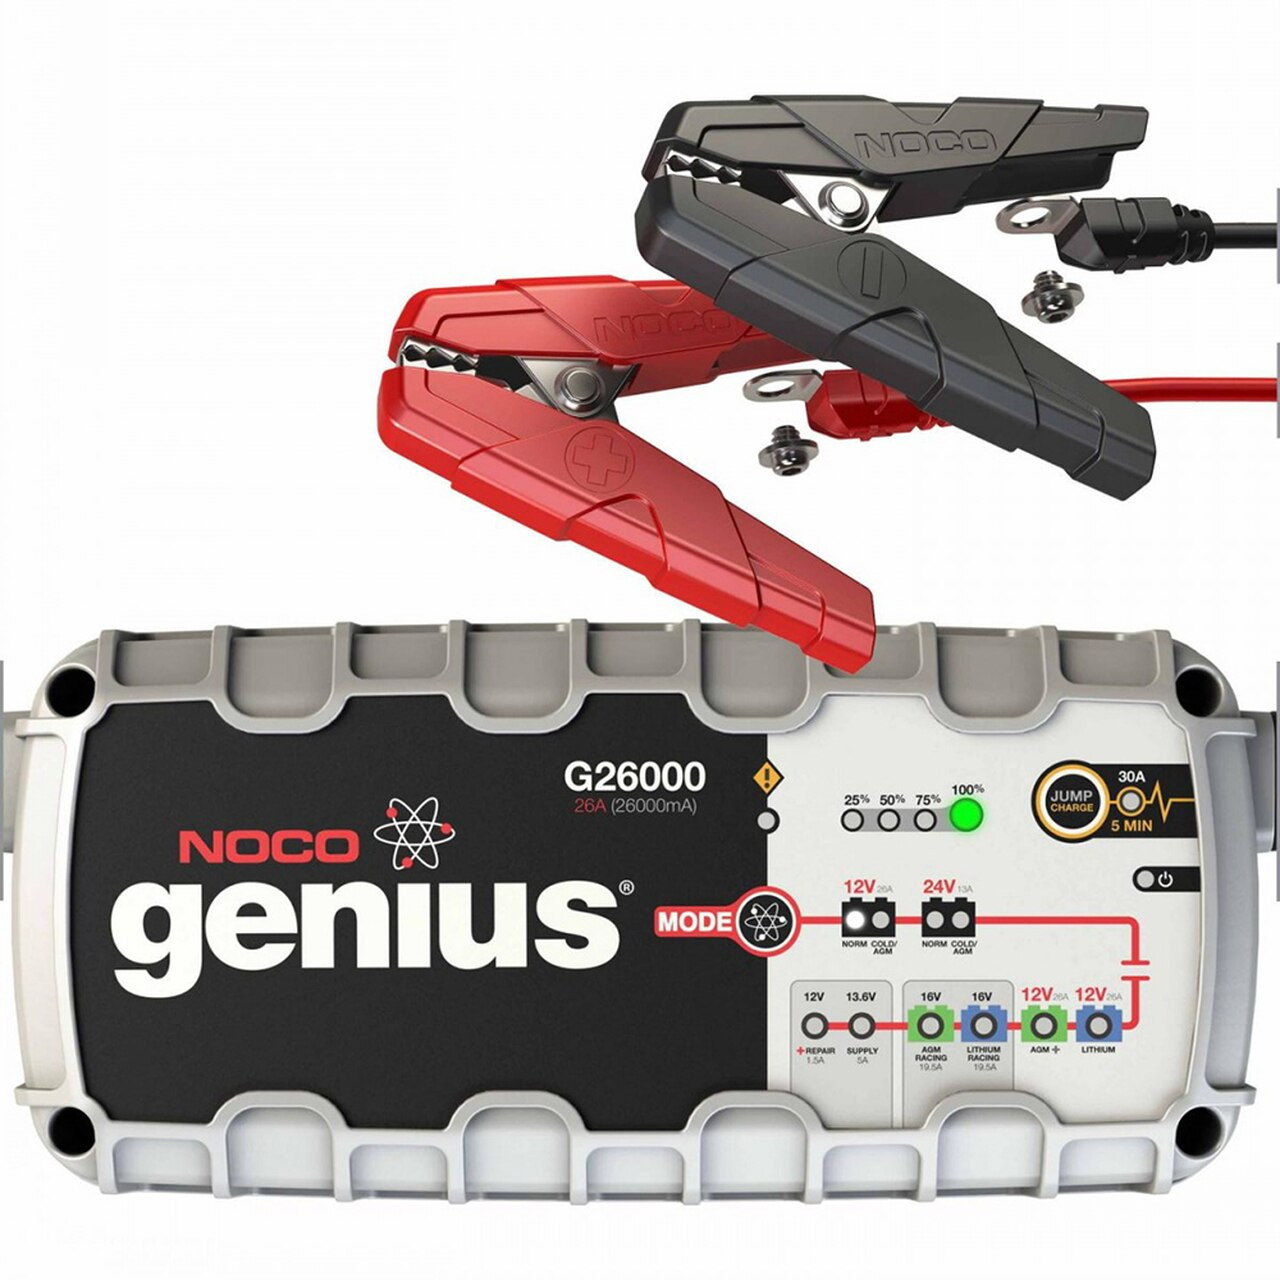 NOCO Genius G26000 12V/24V 26000mA Battery Charger [G26000]